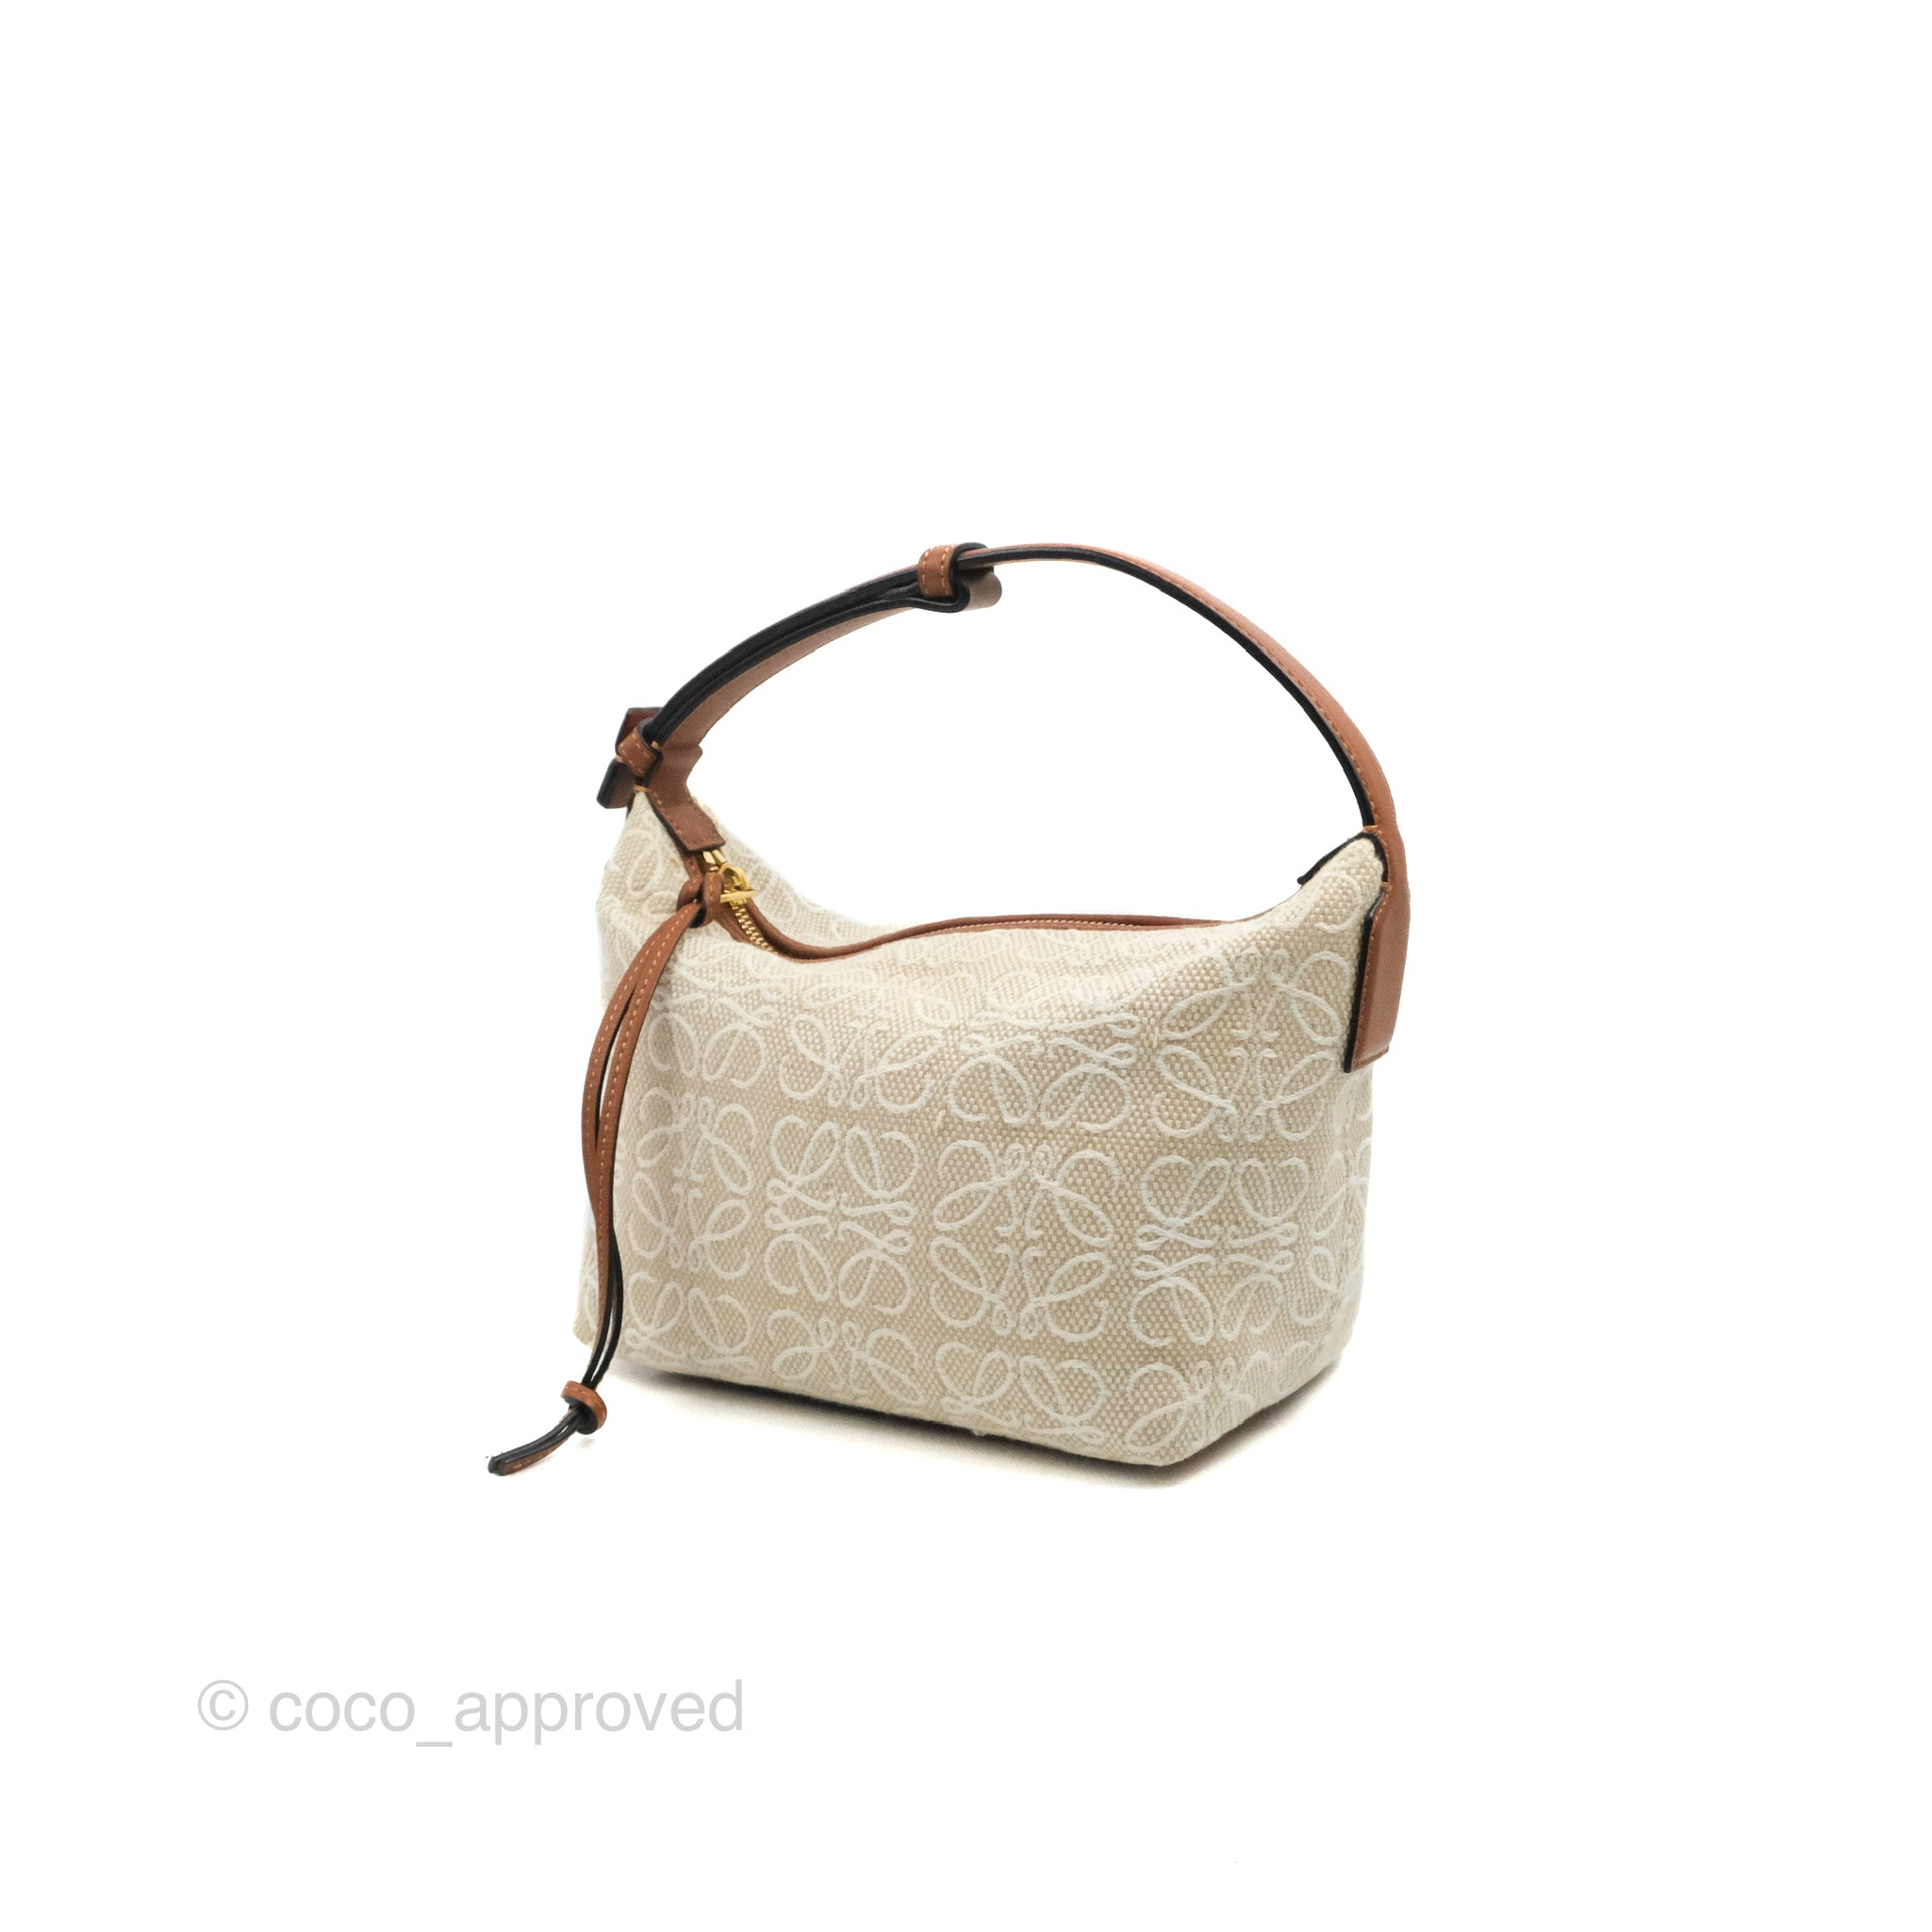 Cubi Small Leather Crossbody Bag in Brown - Loewe